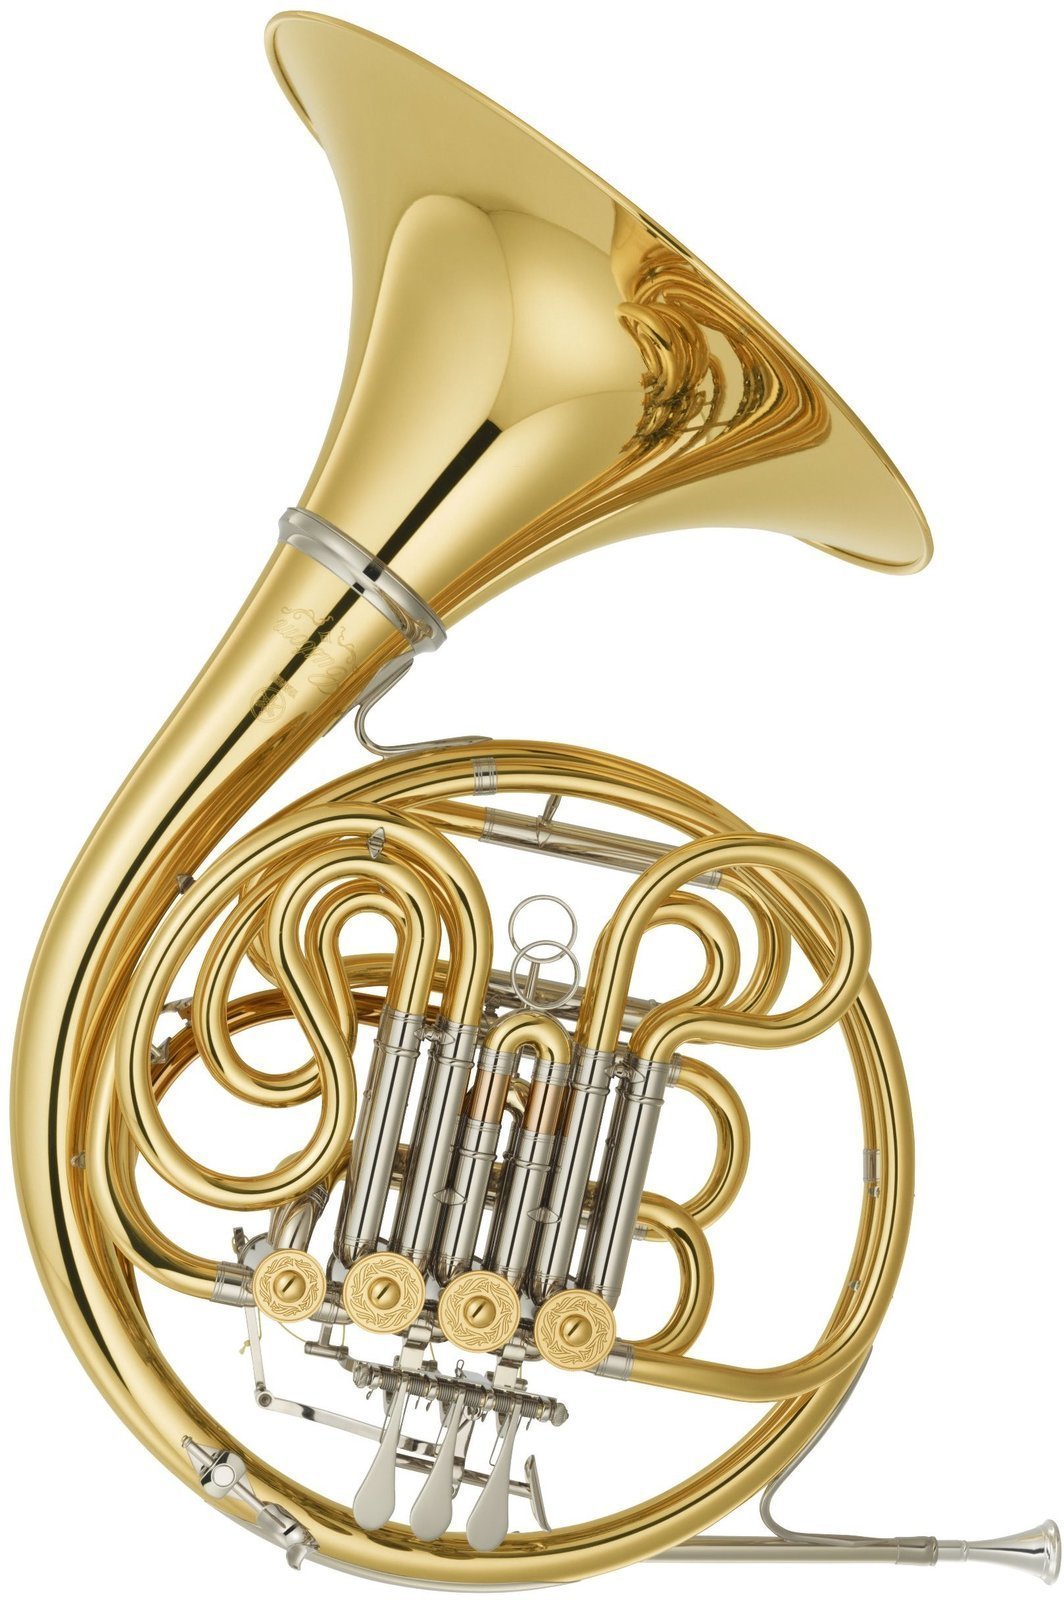 French Horn Yamaha YHR 871D French Horn